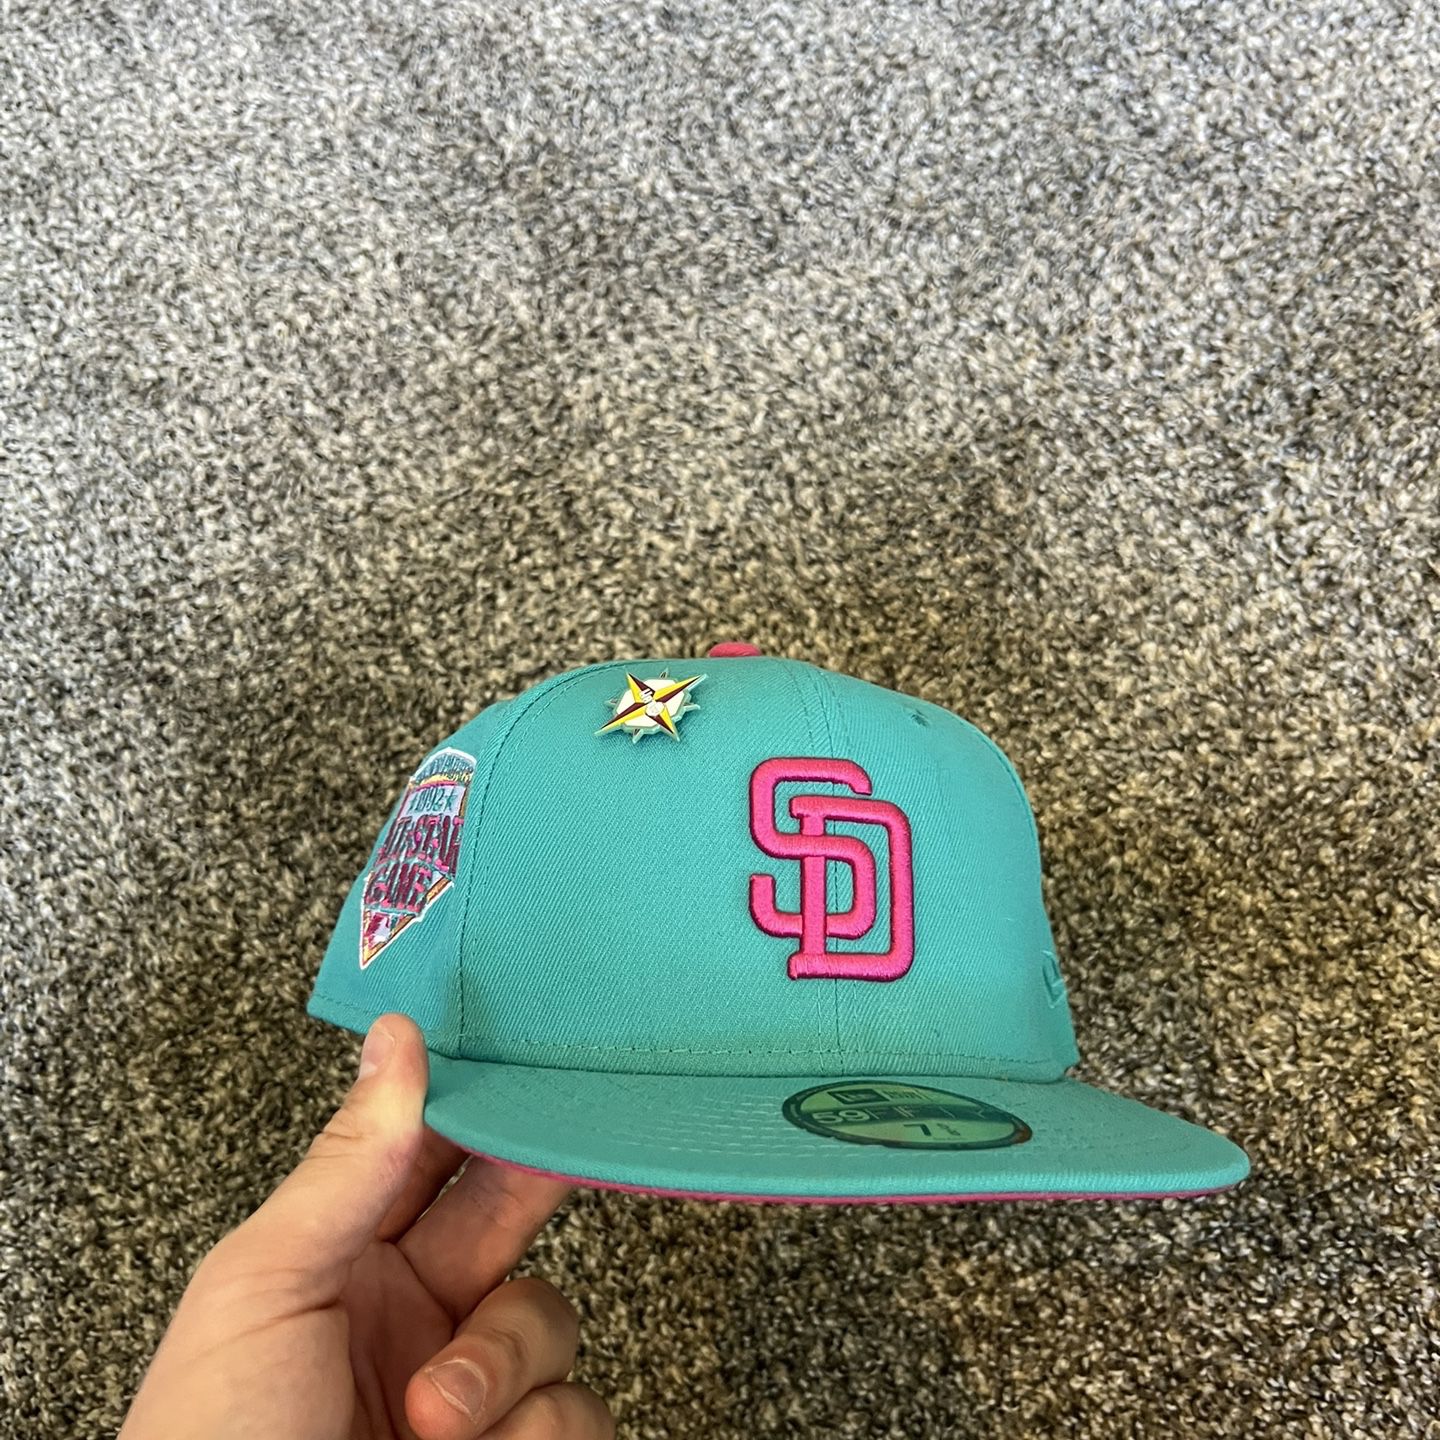 Arizona Diamondbacks New Era Fitted Hat Size 7 for Sale in Colton, CA -  OfferUp